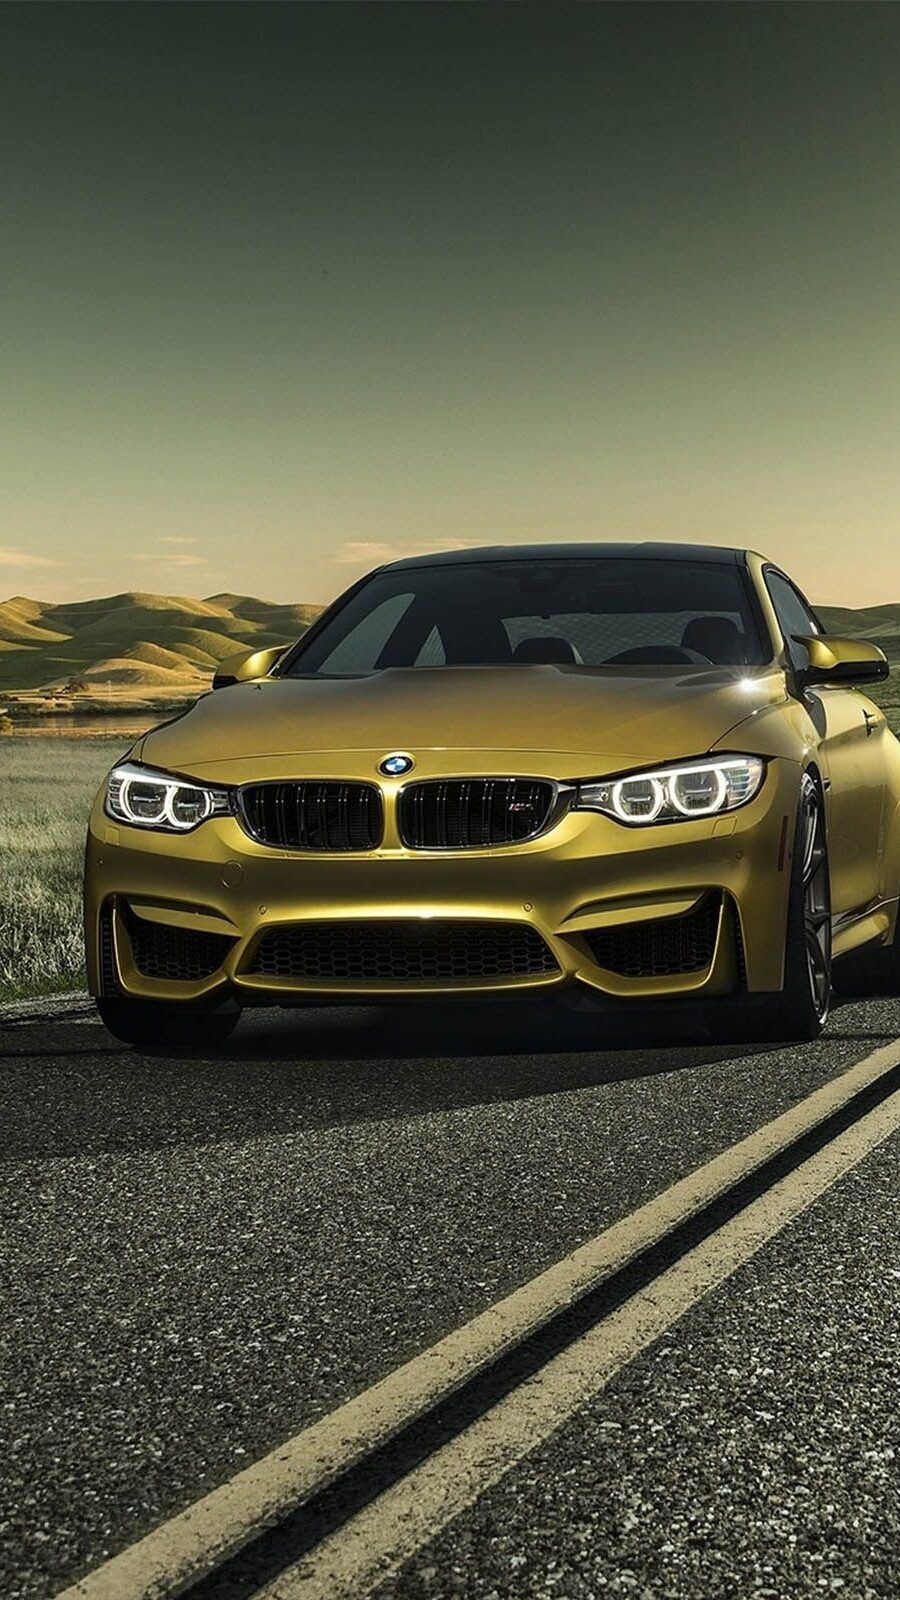 A gold BMW M4 on a desert road - BMW